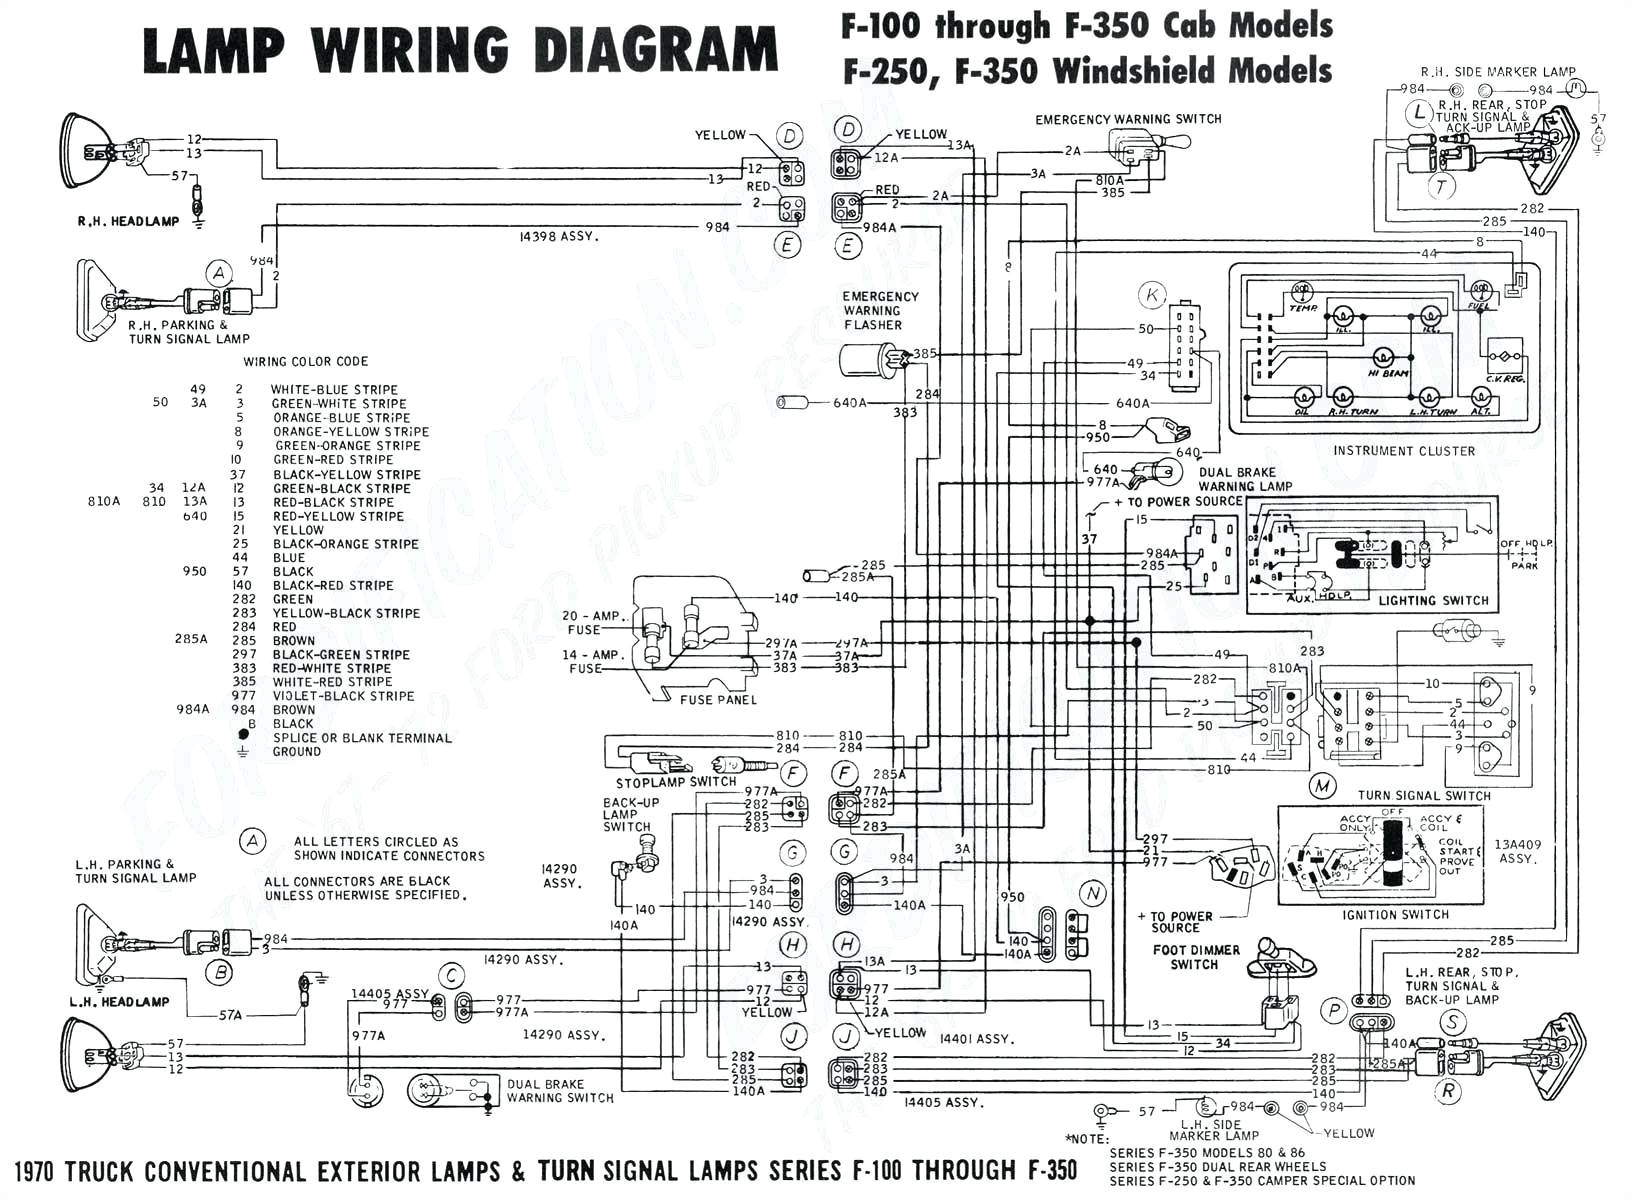 99 ford Escort Wiring Diagram Electrical Diagram ford Escort Circuit Diagrams Wiring Diagram User